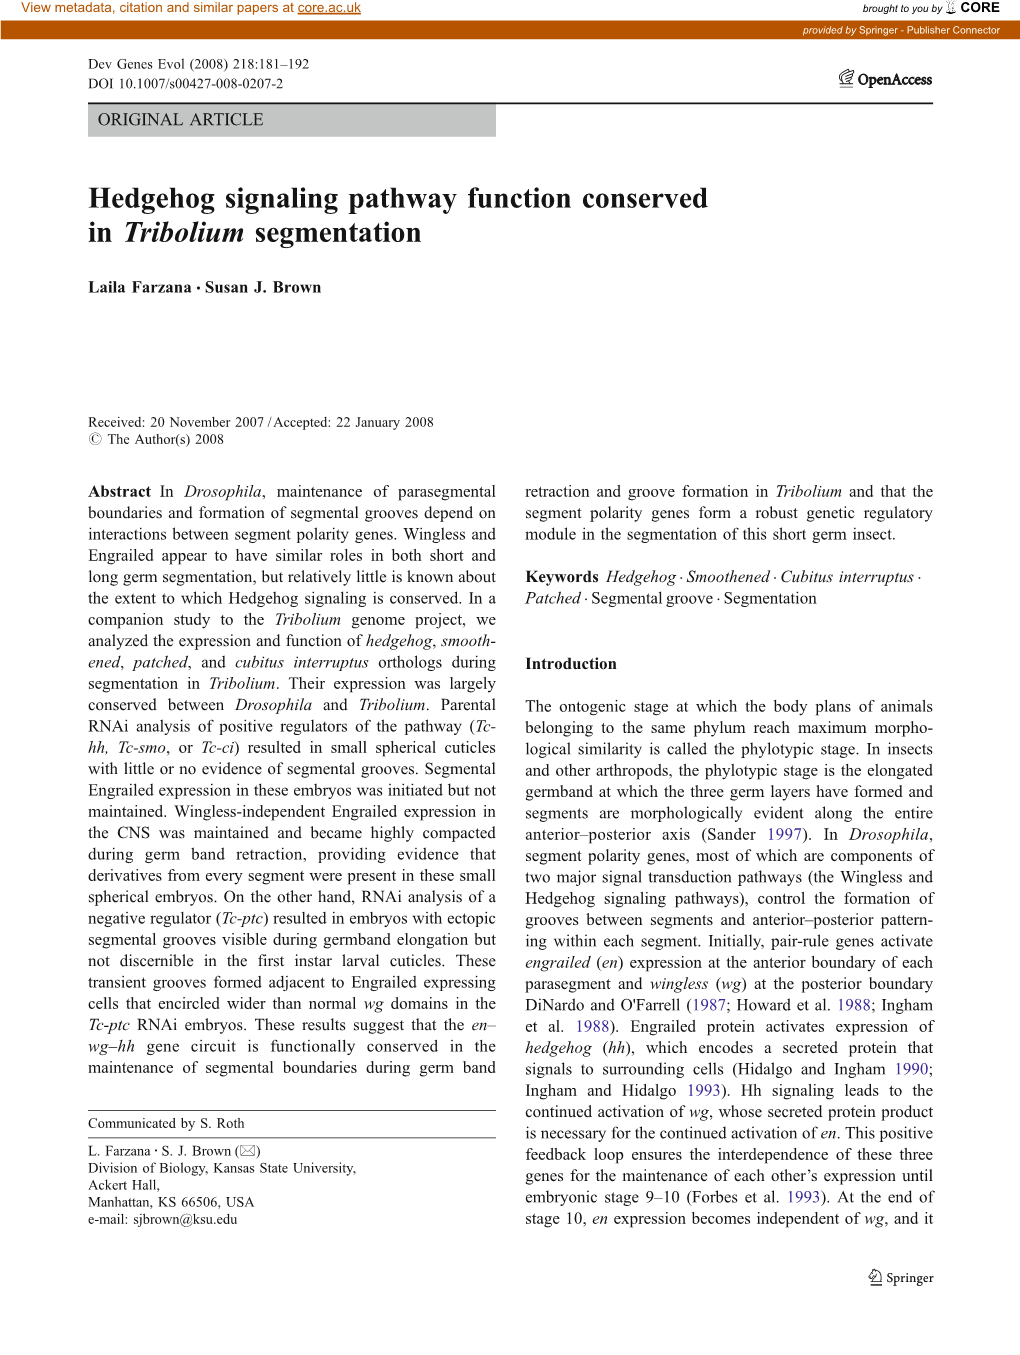 Hedgehog Signaling Pathway Function Conserved in Tribolium Segmentation